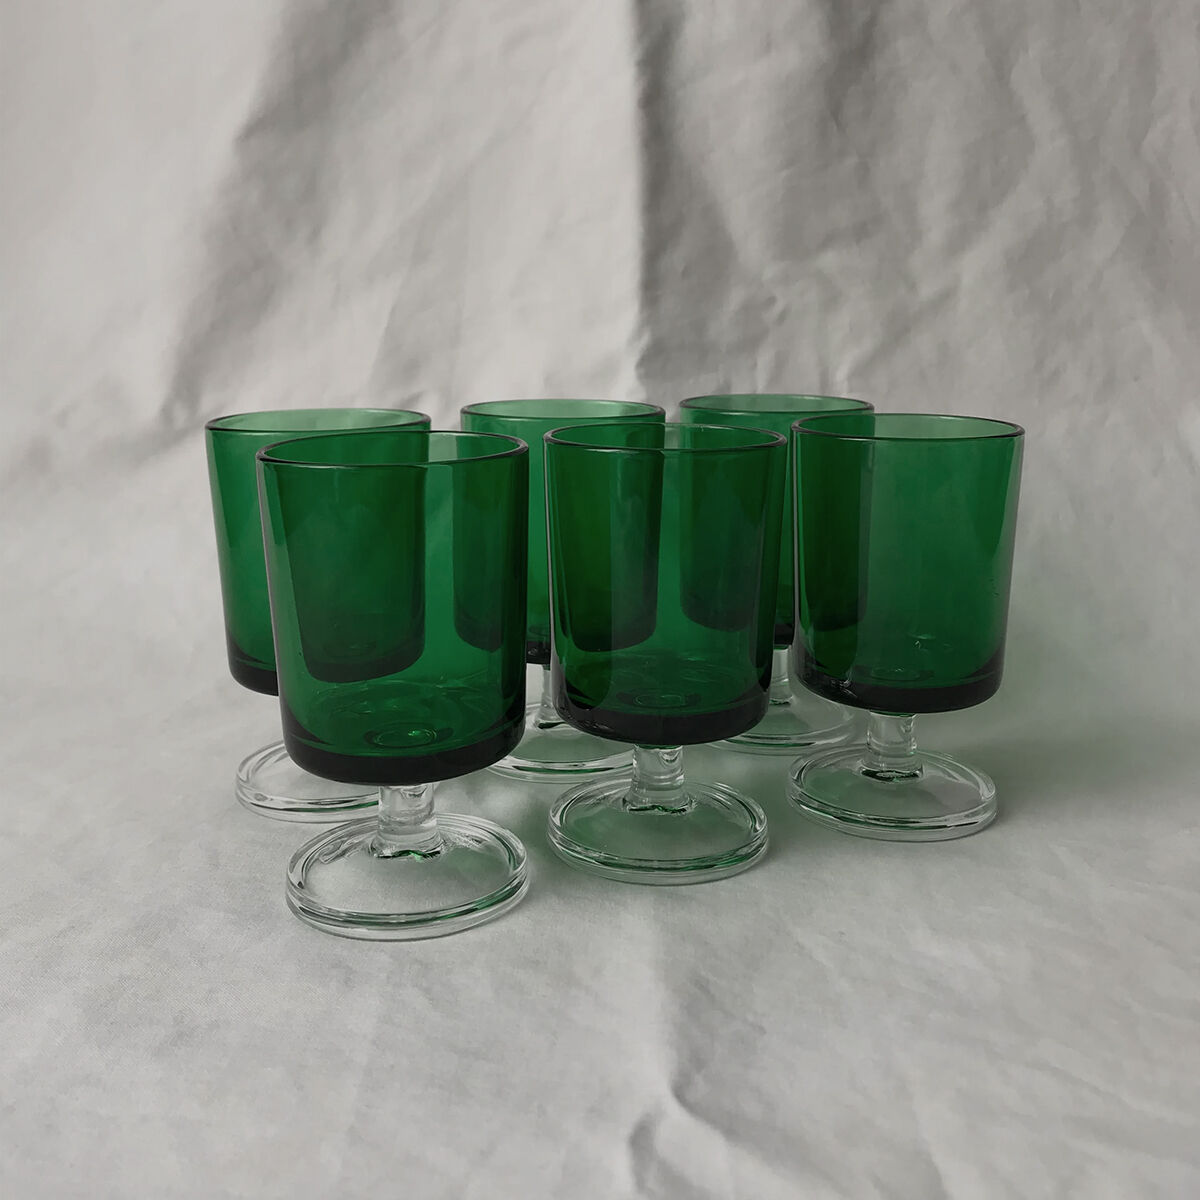 MORE GREEN GLASSES